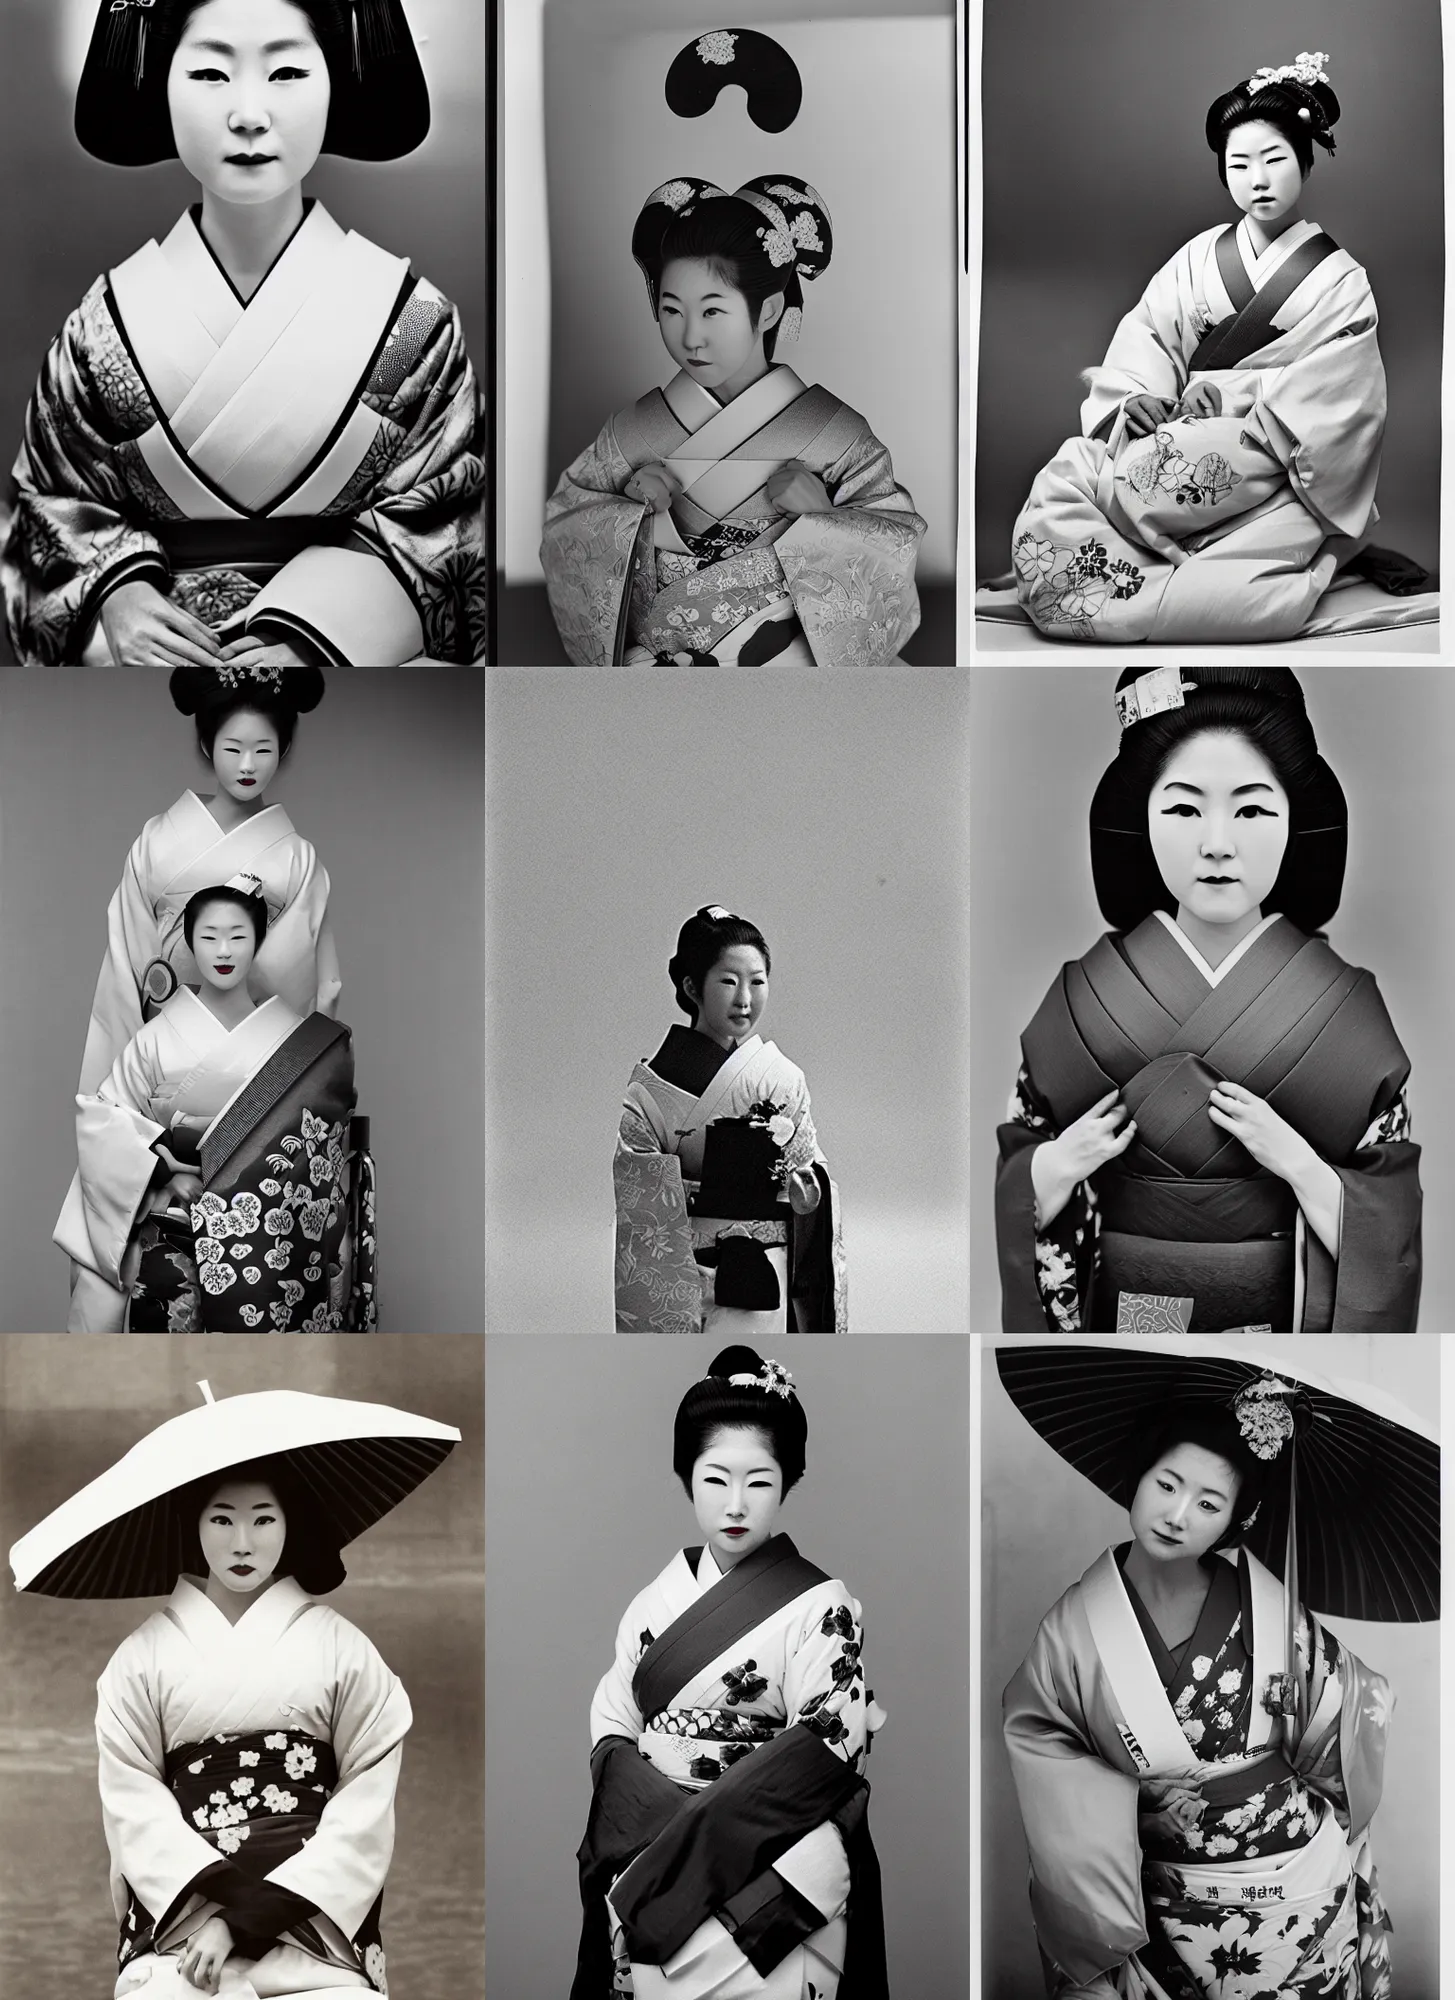 Prompt: Portrait Photograph of a Japanese Geisha Kodak Eastman Double-X Black and White Negative Film 5222